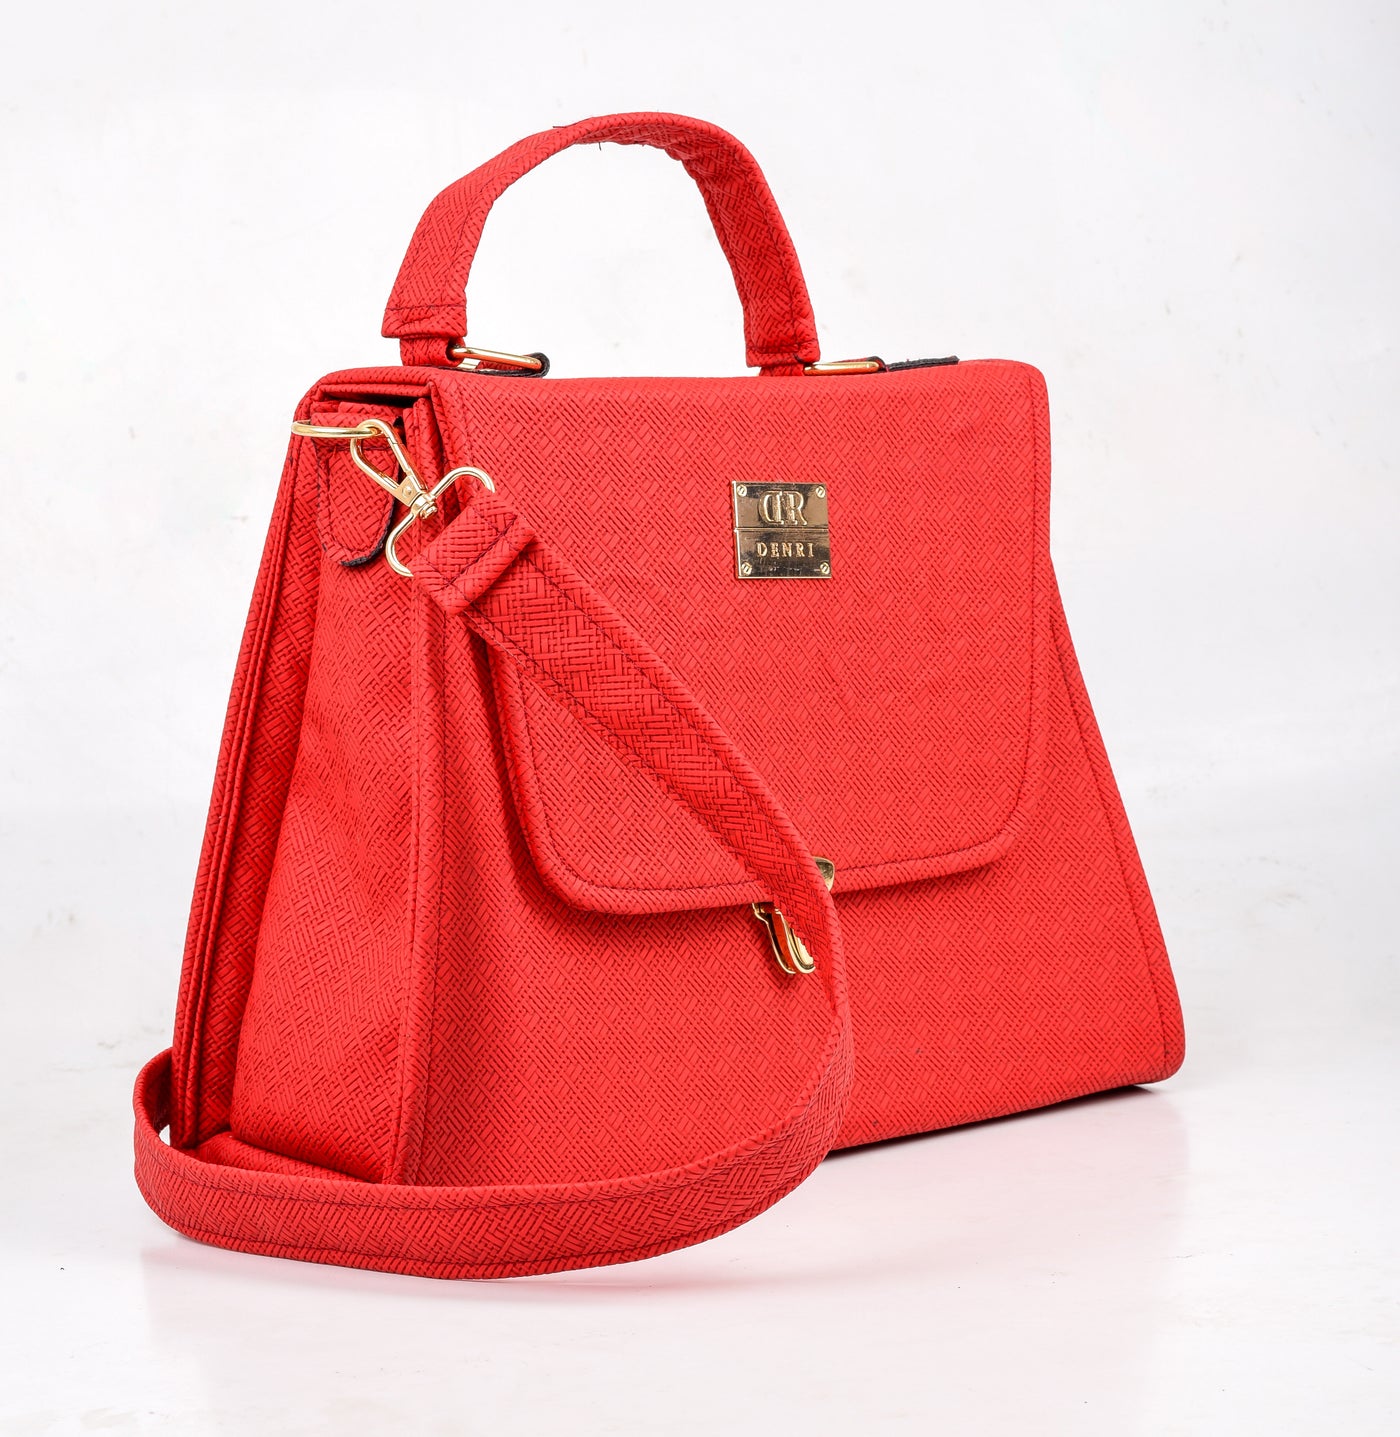 Zuri Pattern Red Handbag